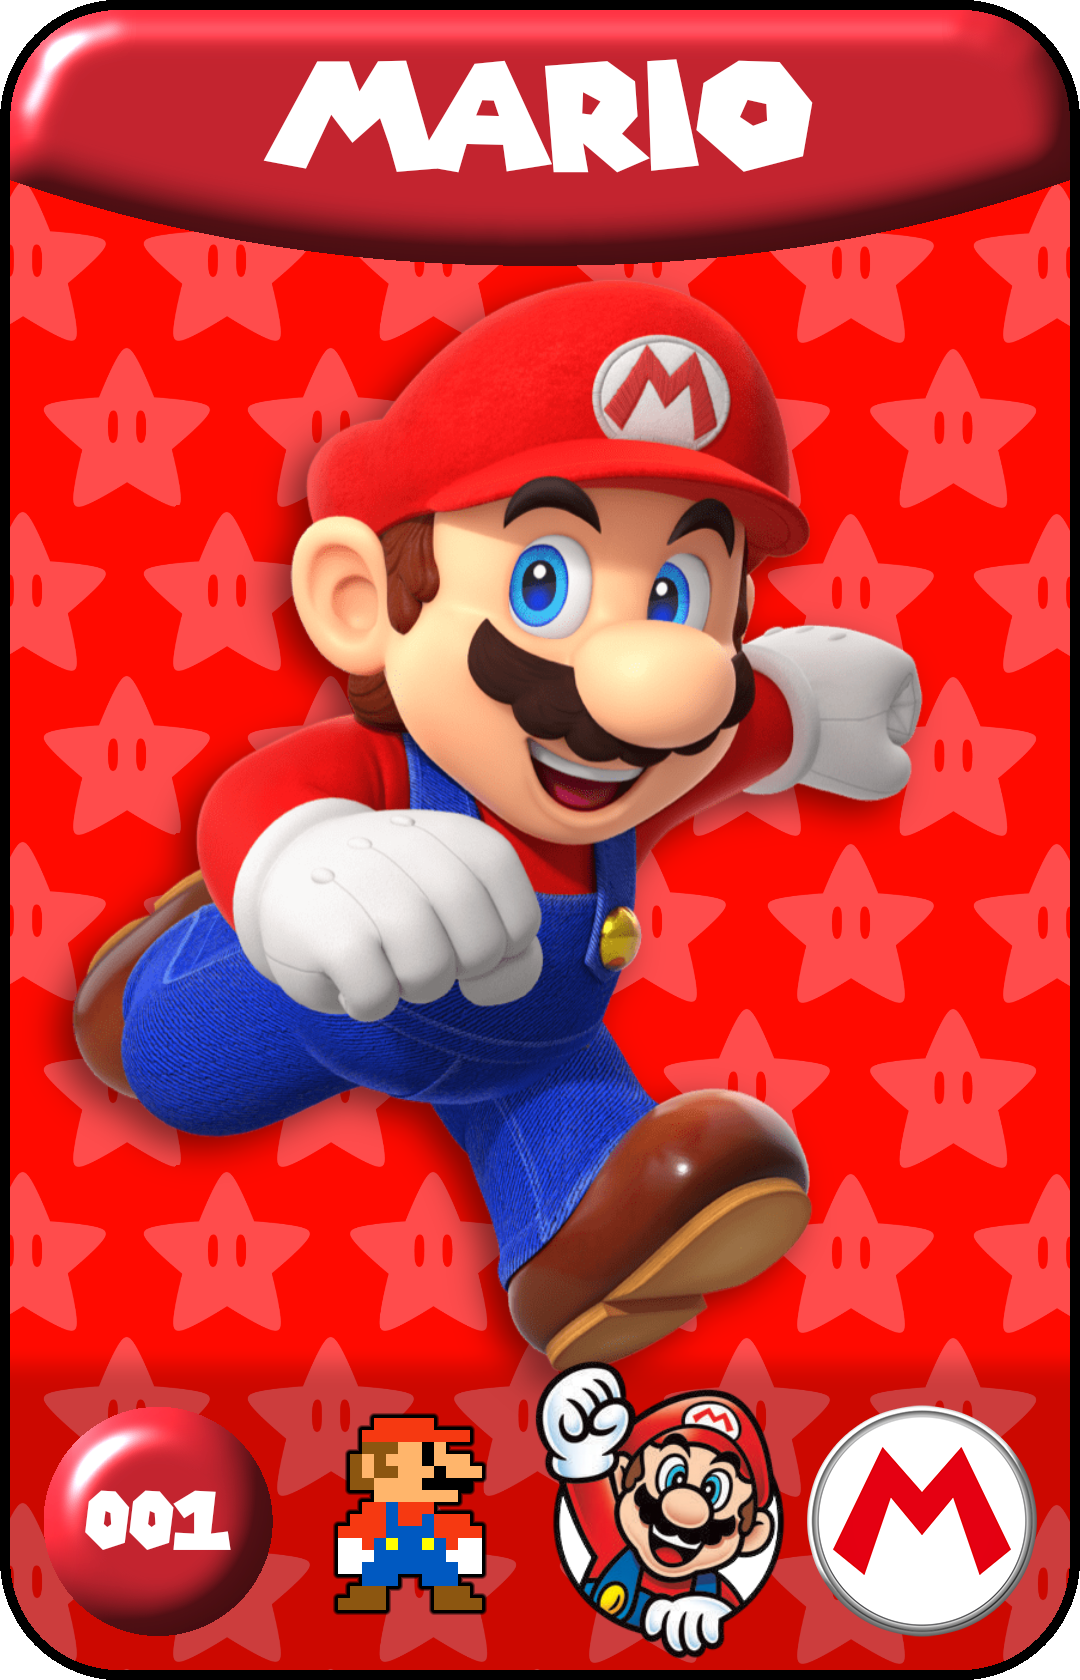 001 - Mario (1).png